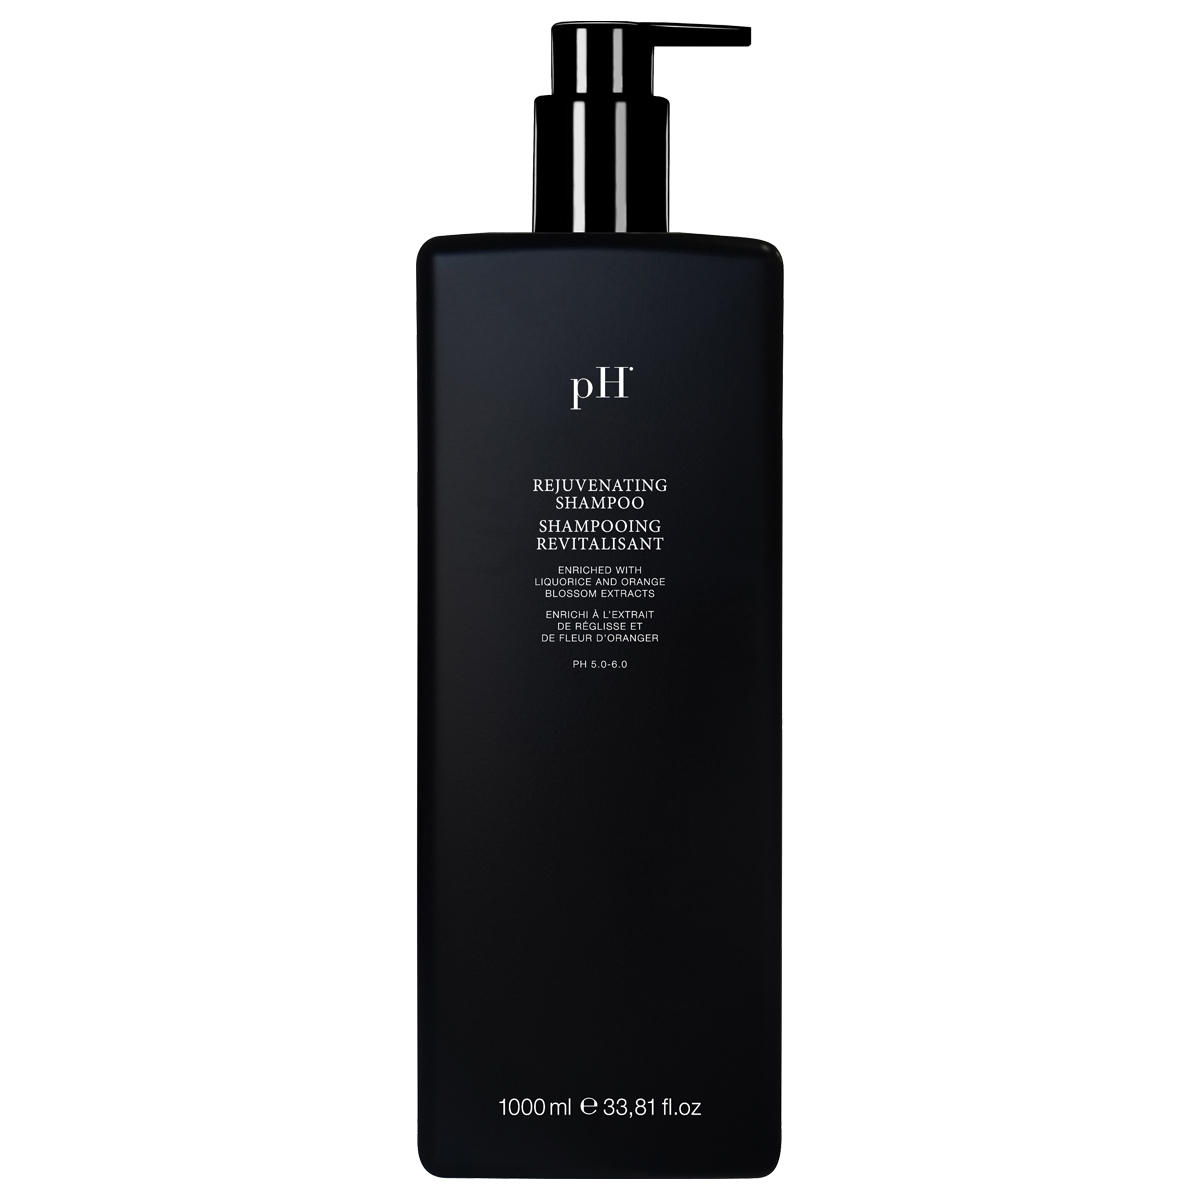 pH Rejuvenating Shampoo 1 Liter - 1